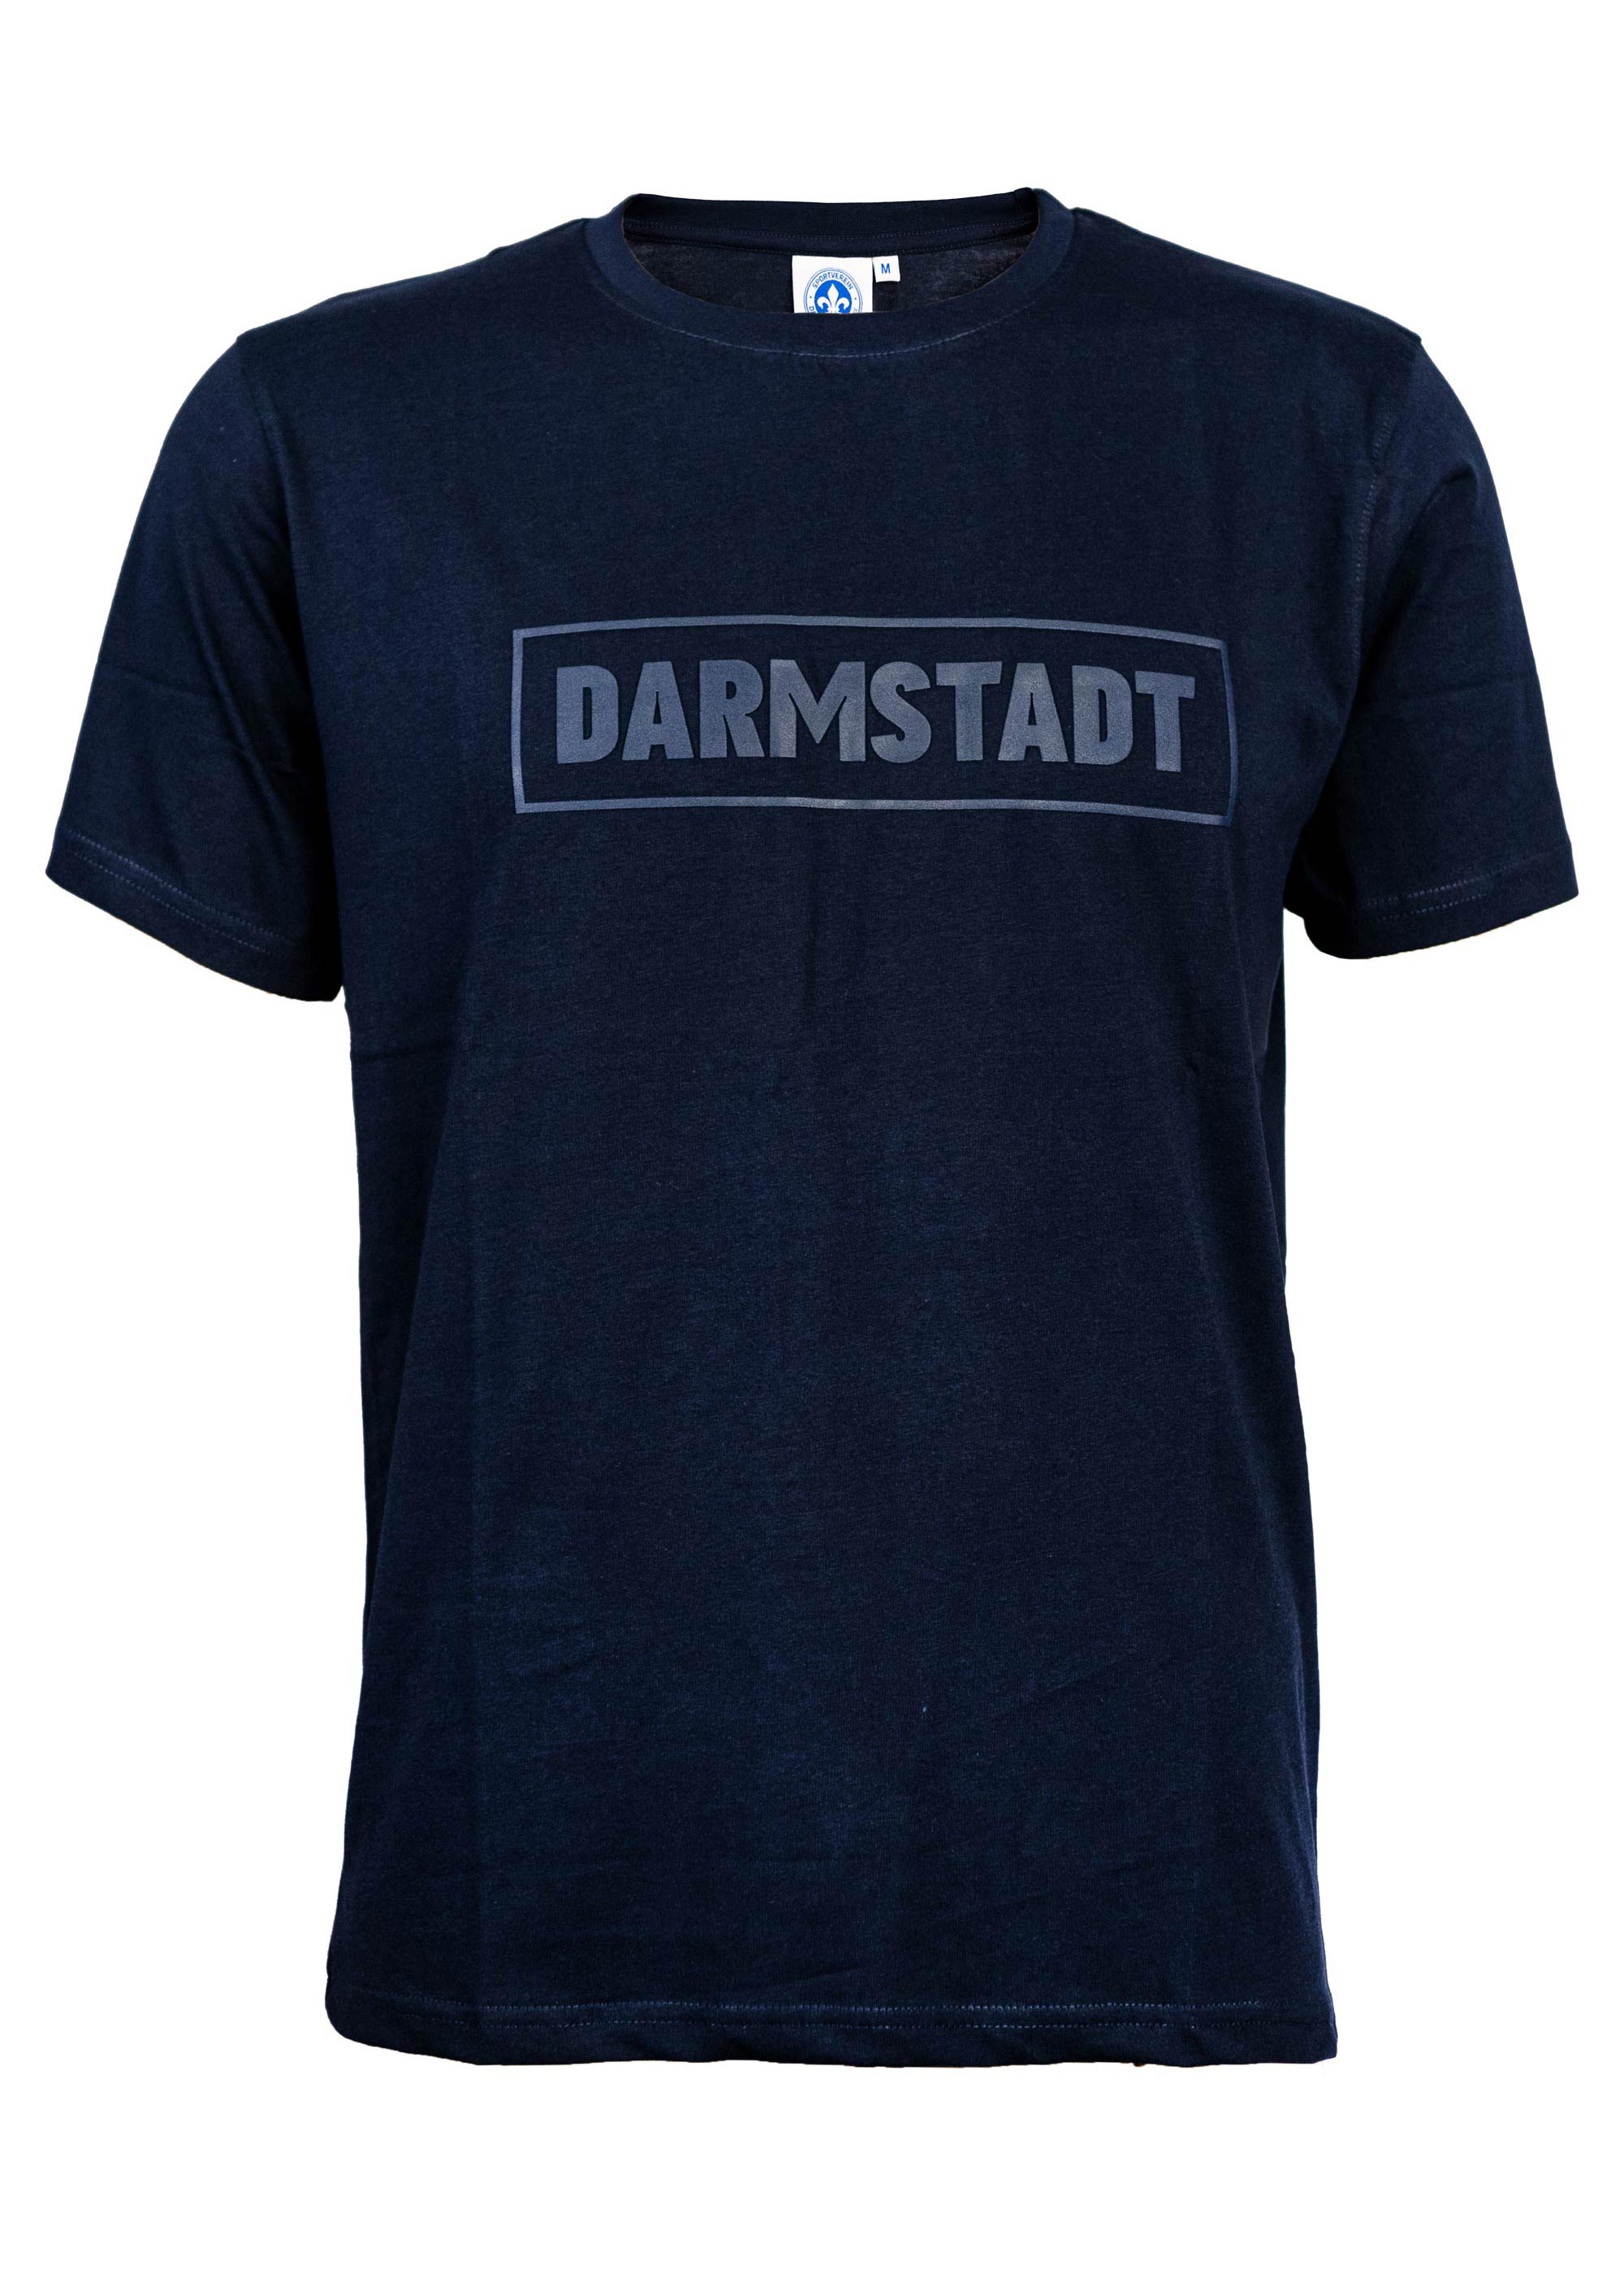 SV 98 Shirt "Darmstadt"